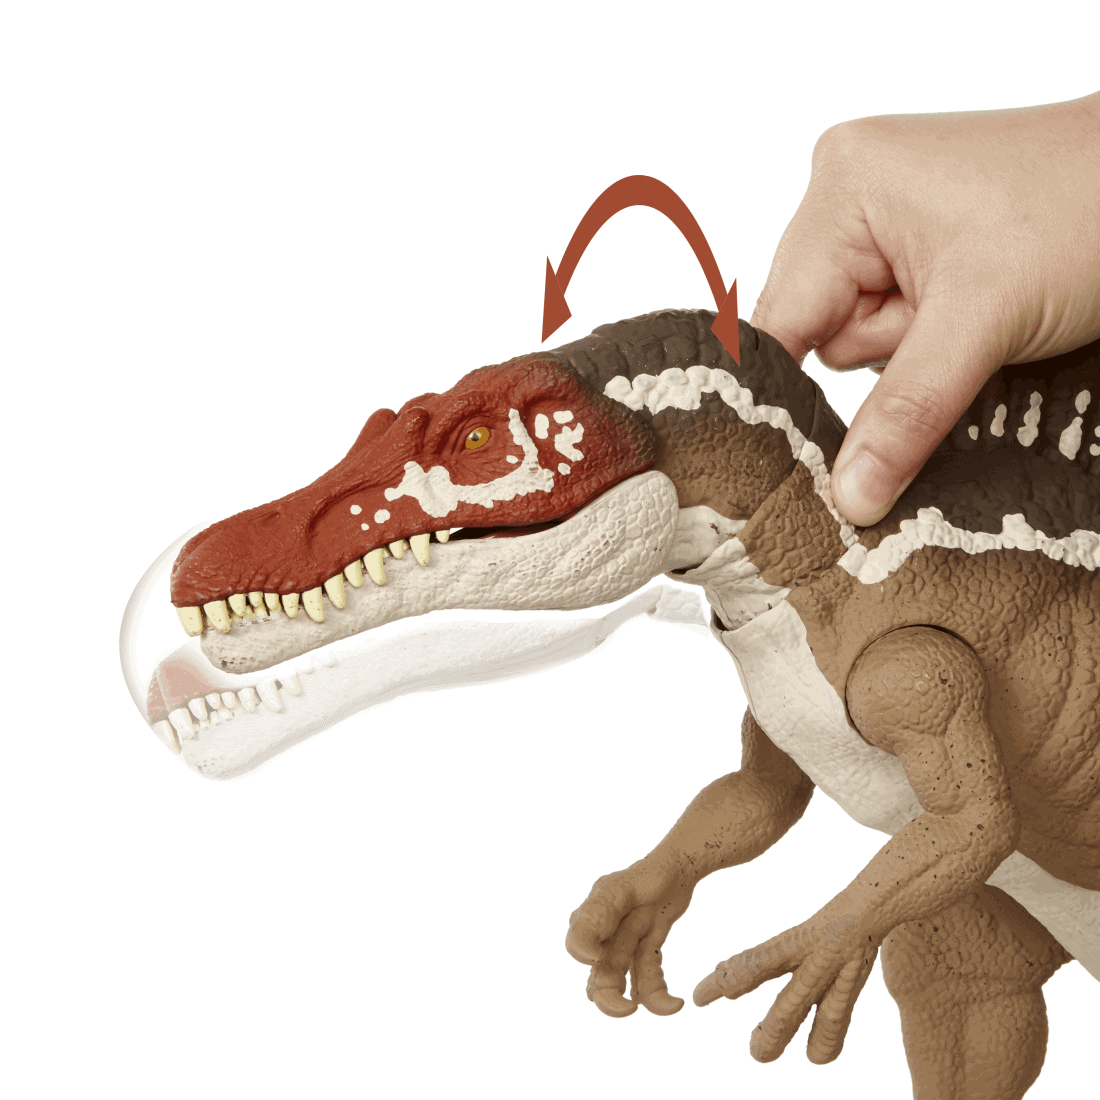 Jurassic Park - Spinosaurus - Δεινόσαυρος Που "Δαγκώνει"